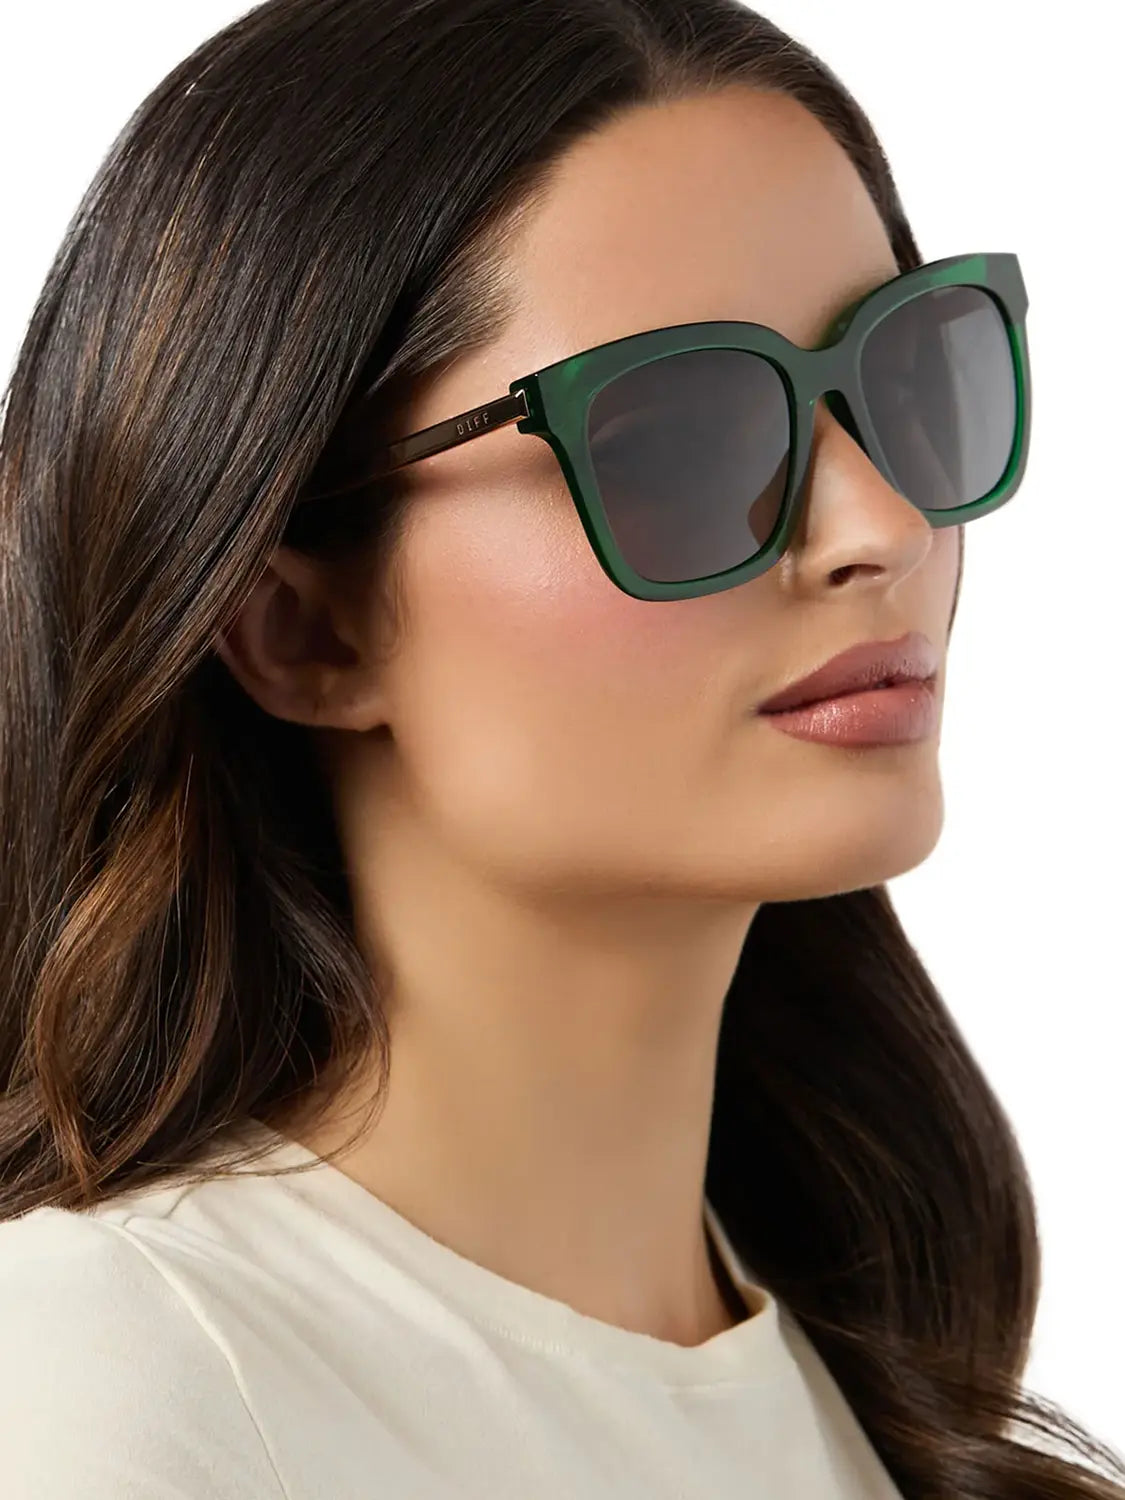 DIFF eyewear bella sunglasses in palm green crystal and grey polarized